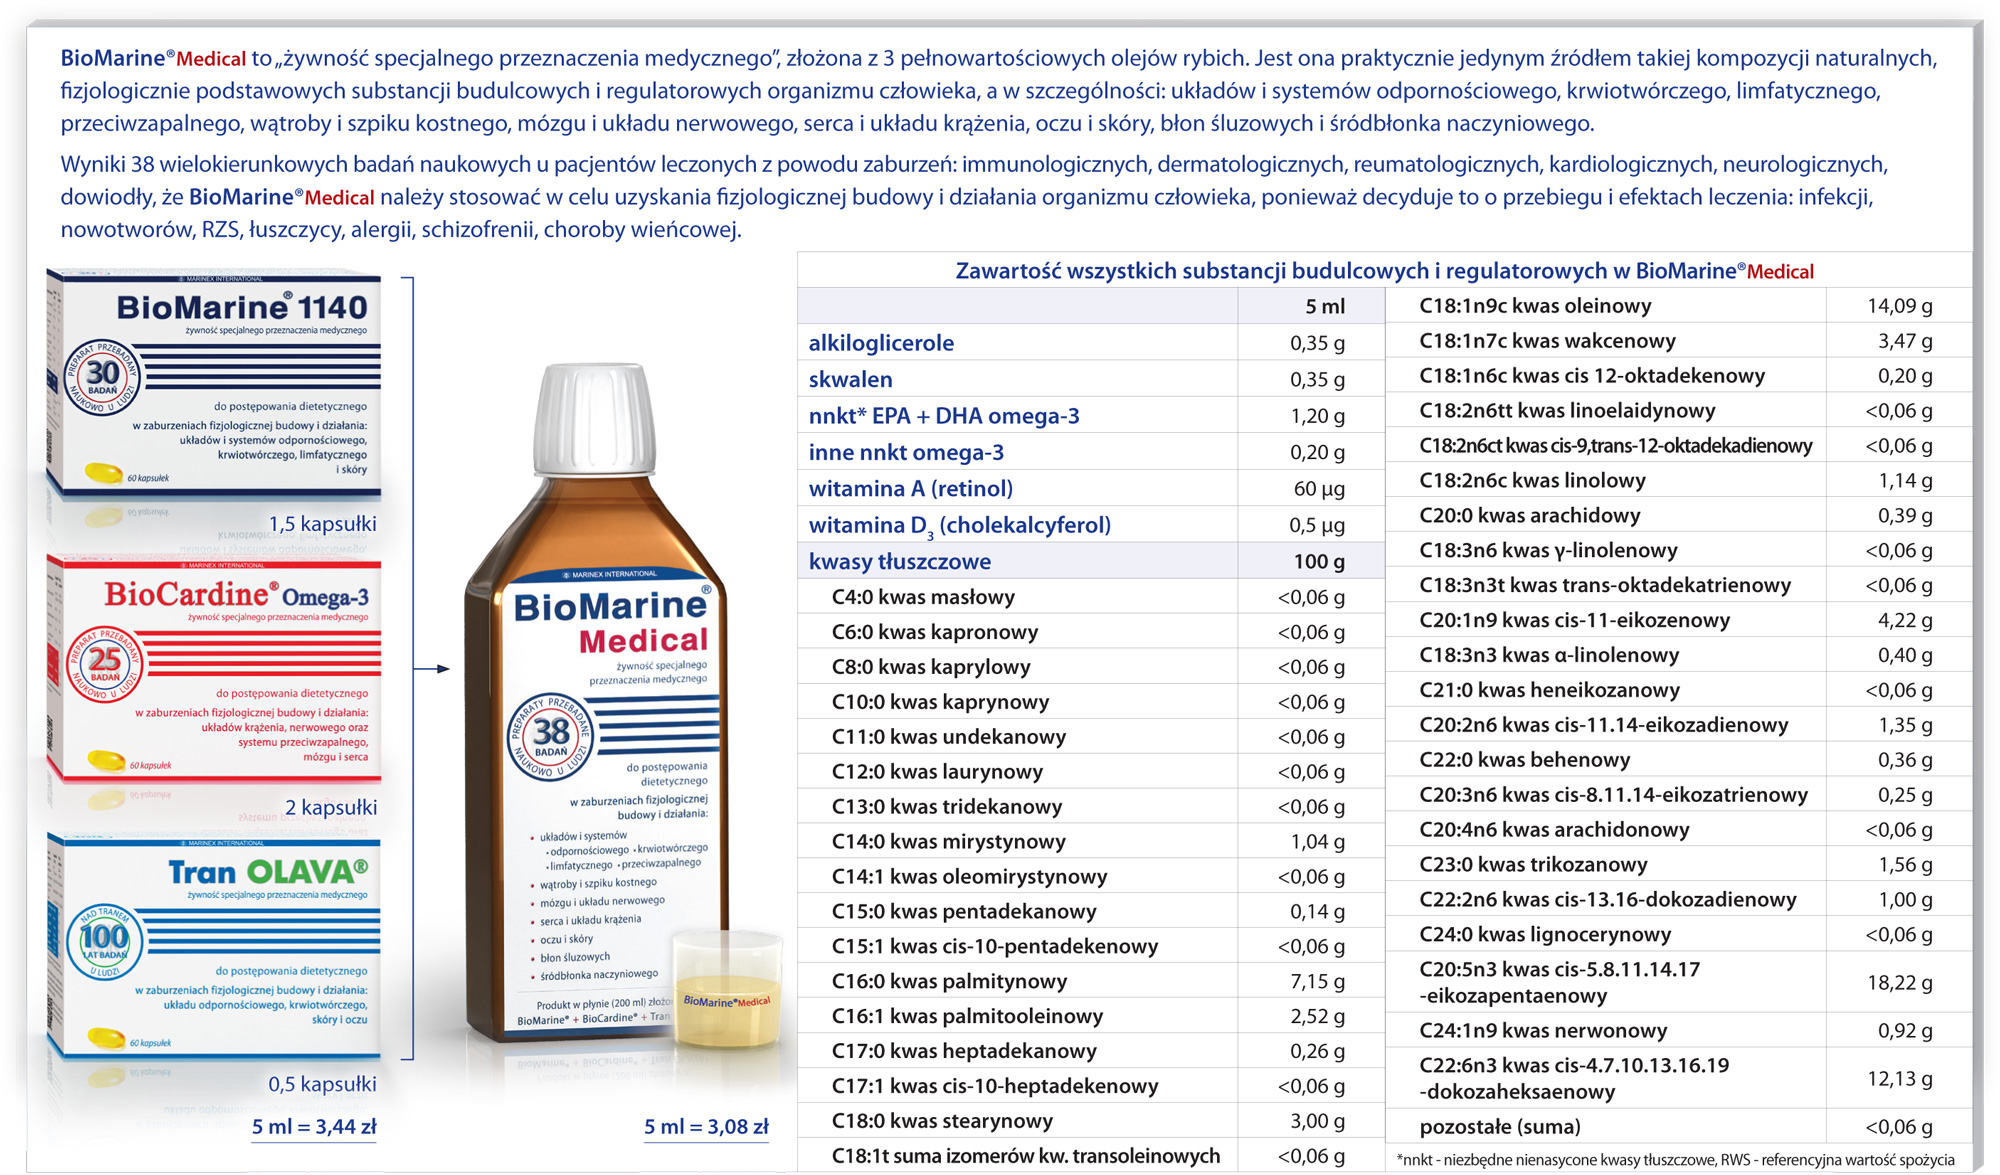 biomarinemedical, biomarine, tranolava, biocardine, 37 badań, grypa, infekcje, rak